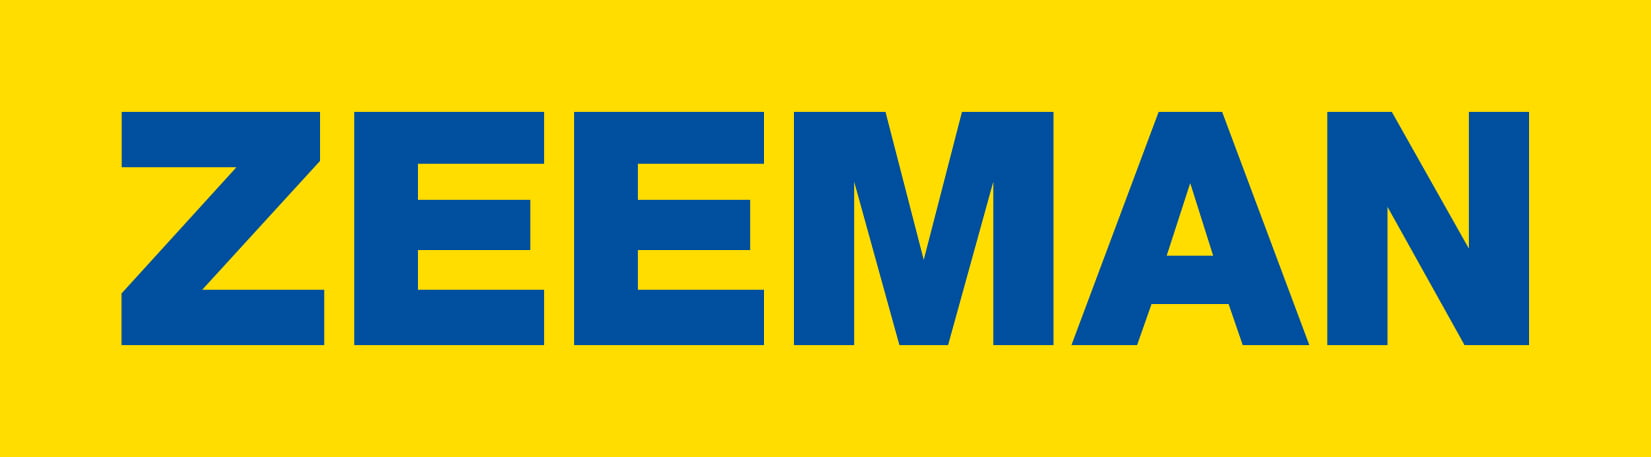 Zeeman logo